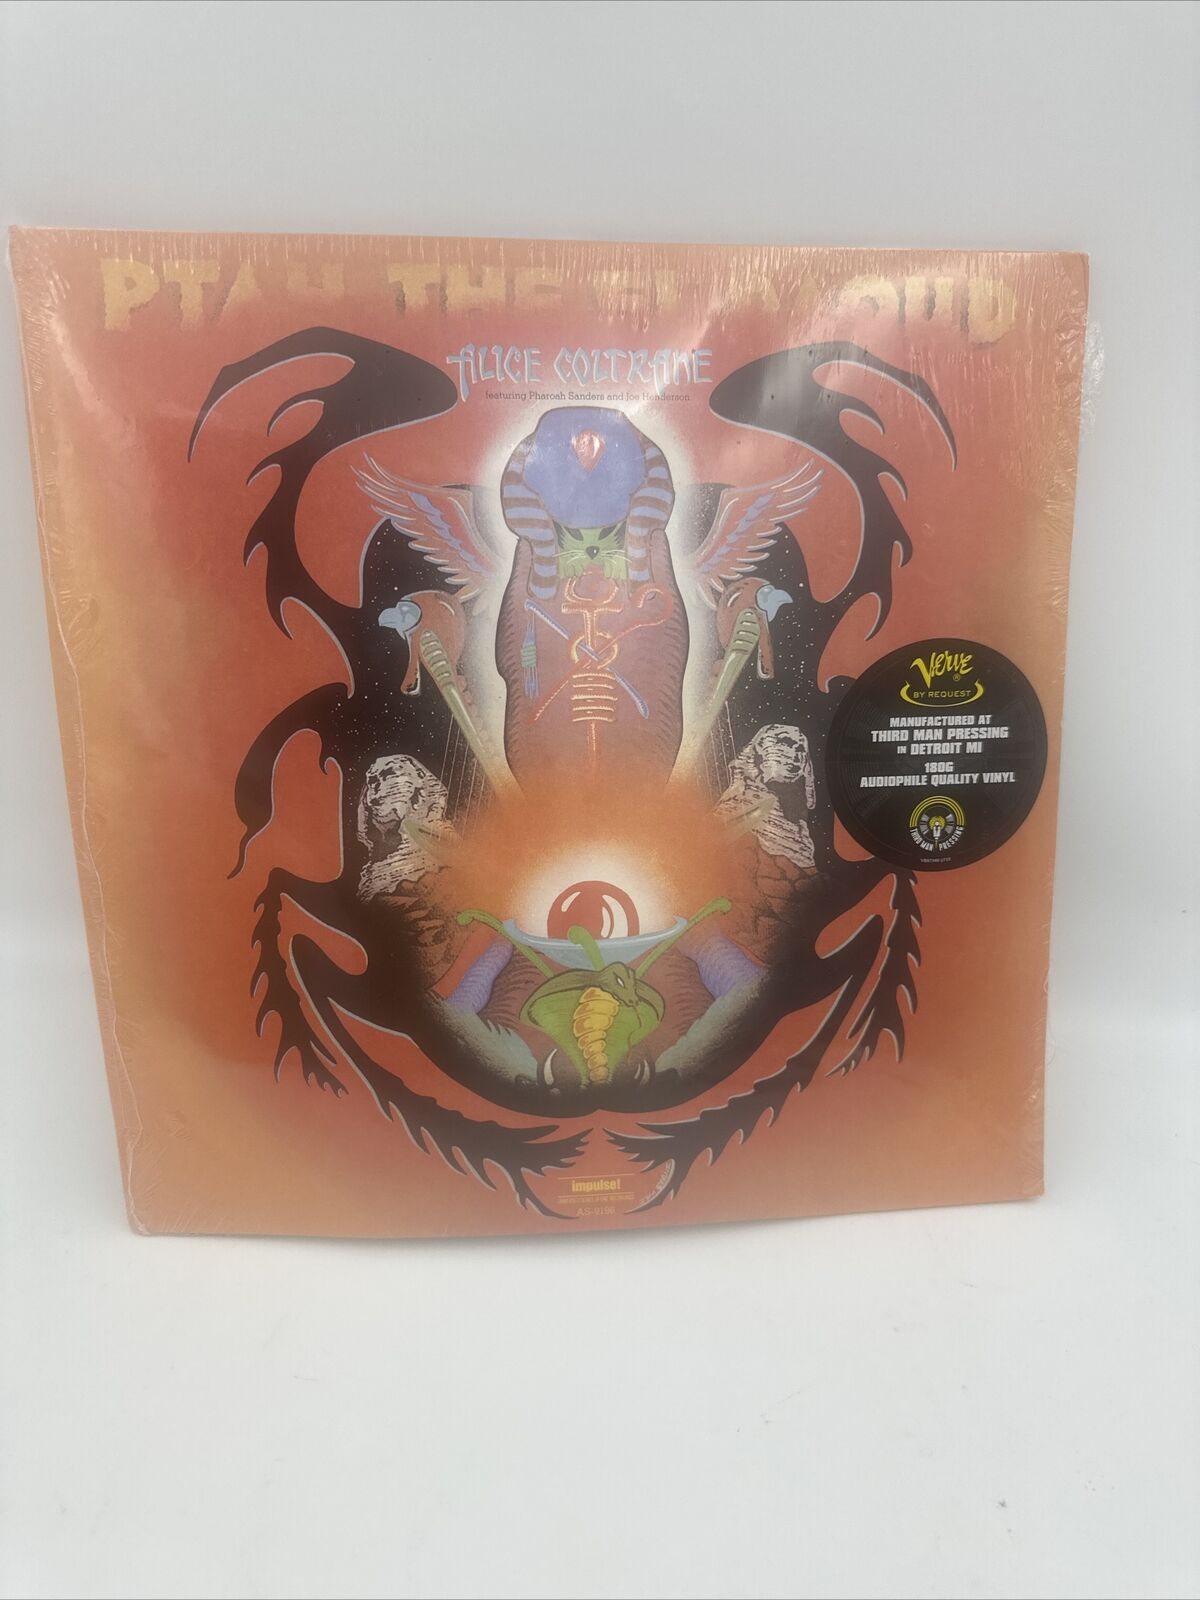 Alice Coltrane Ptah The El Daoud Verve request series \'22 vinyl LP album vinyl